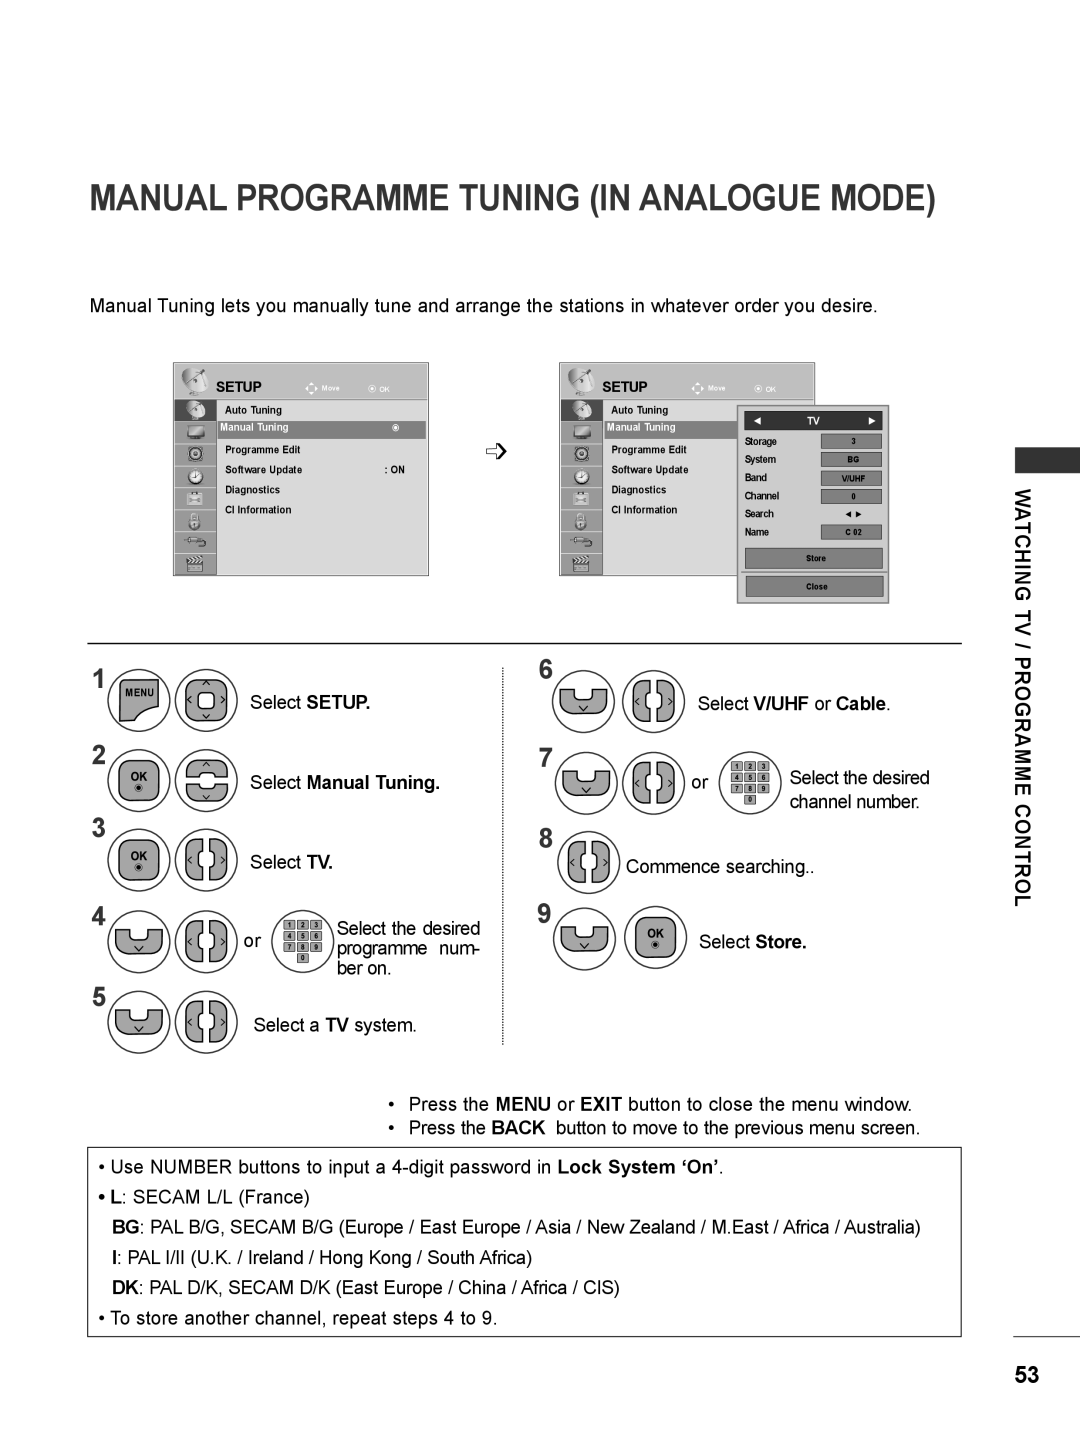 LG Electronics M2280DB, M2780DF, M2780DN Manual Programme Tuning In Analogue Mode, Select SETUP, Select Manual Tuning 